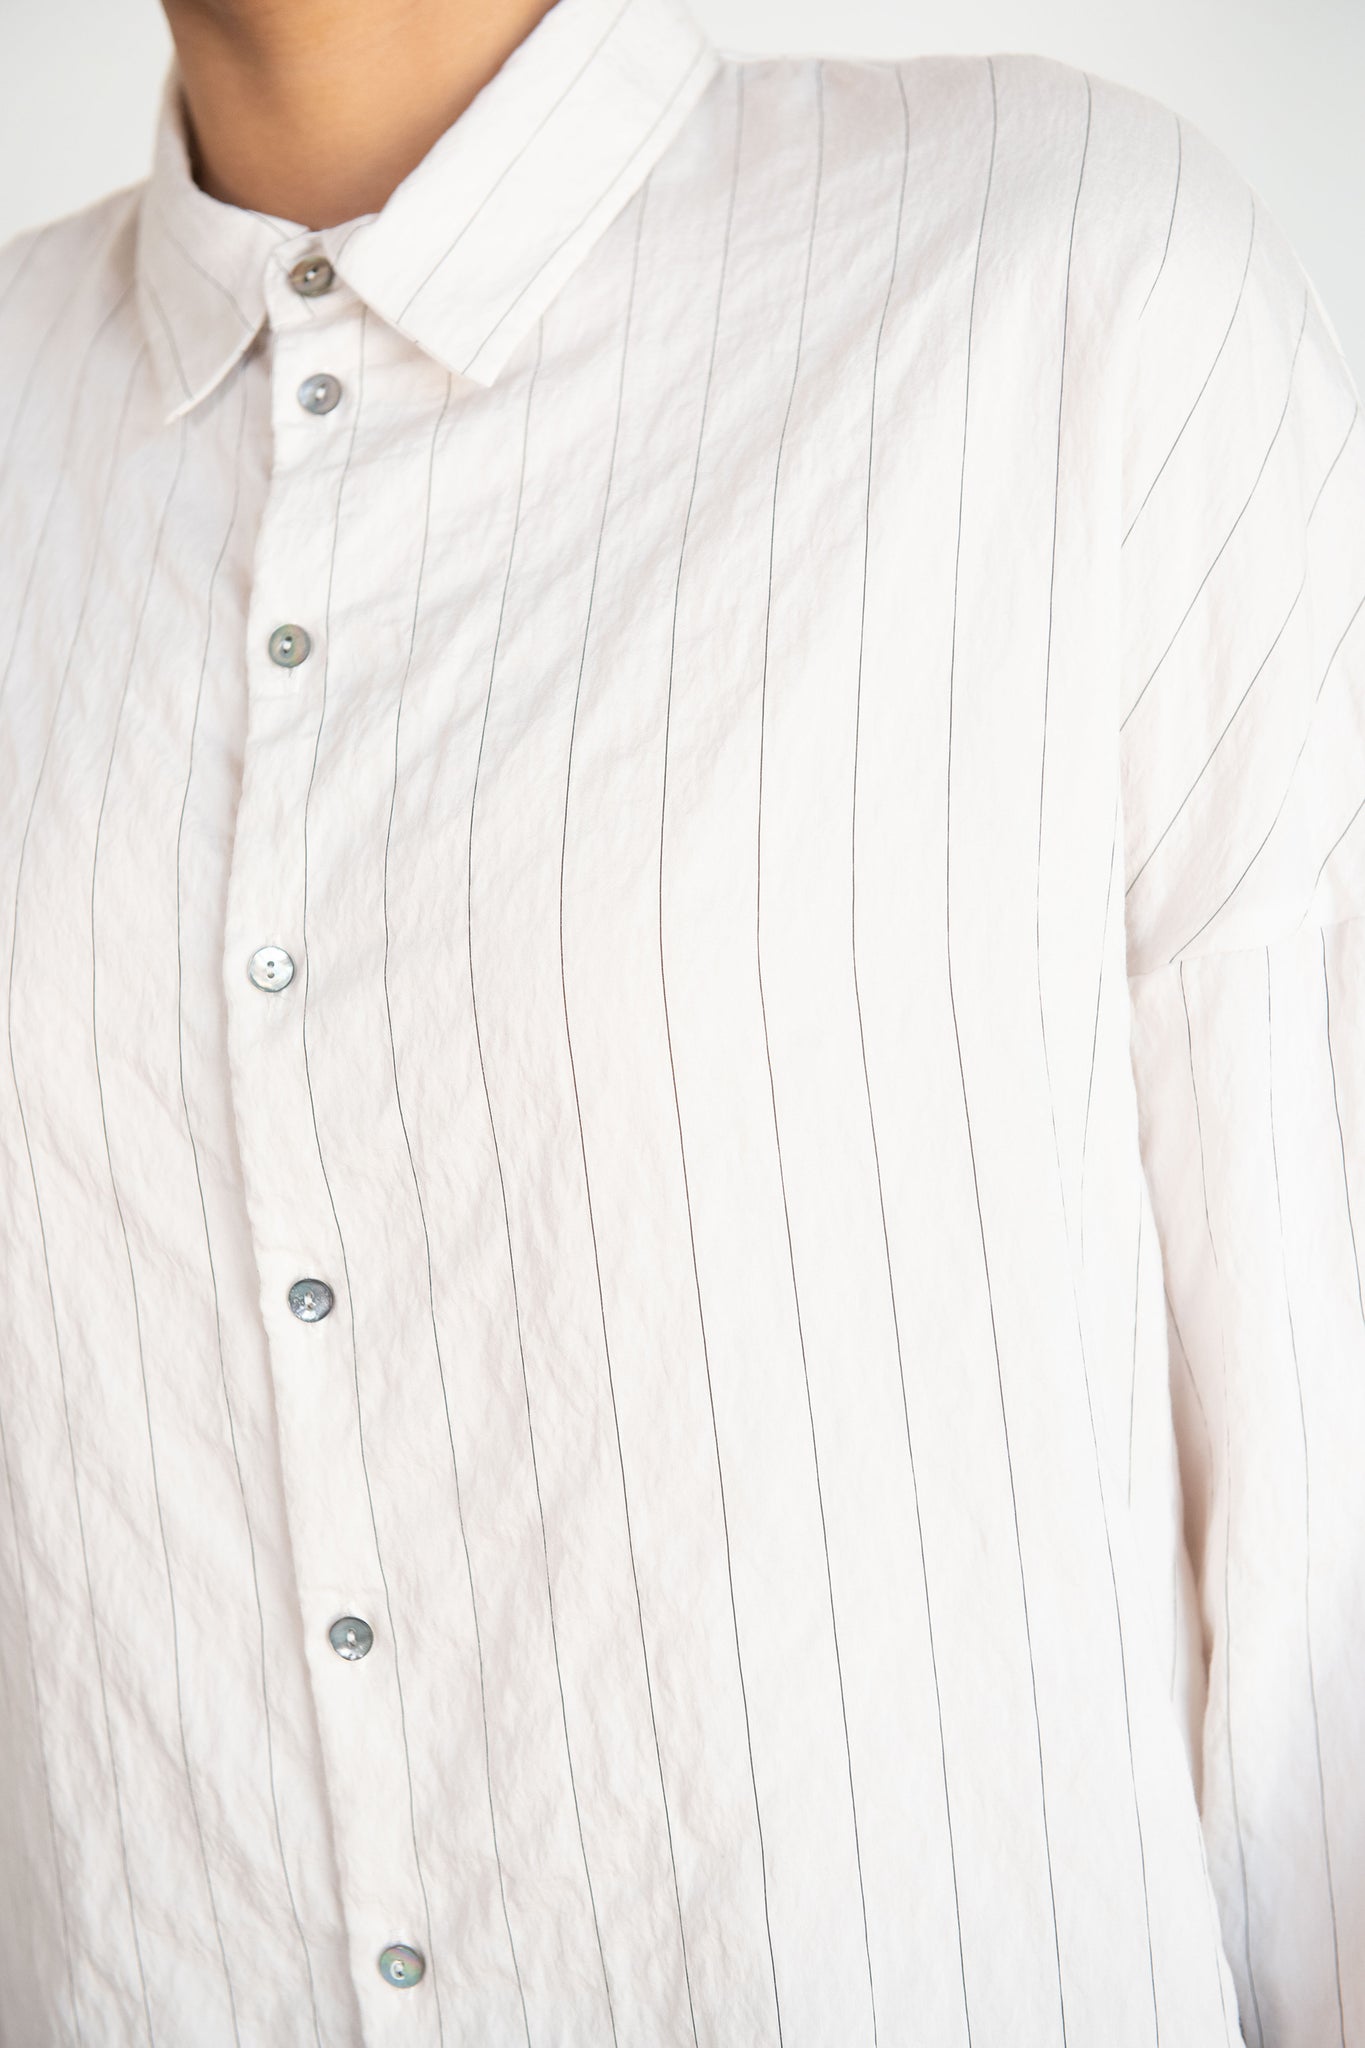 Album di Famiglia - Unisex Collar Shirt, offwhite stripes